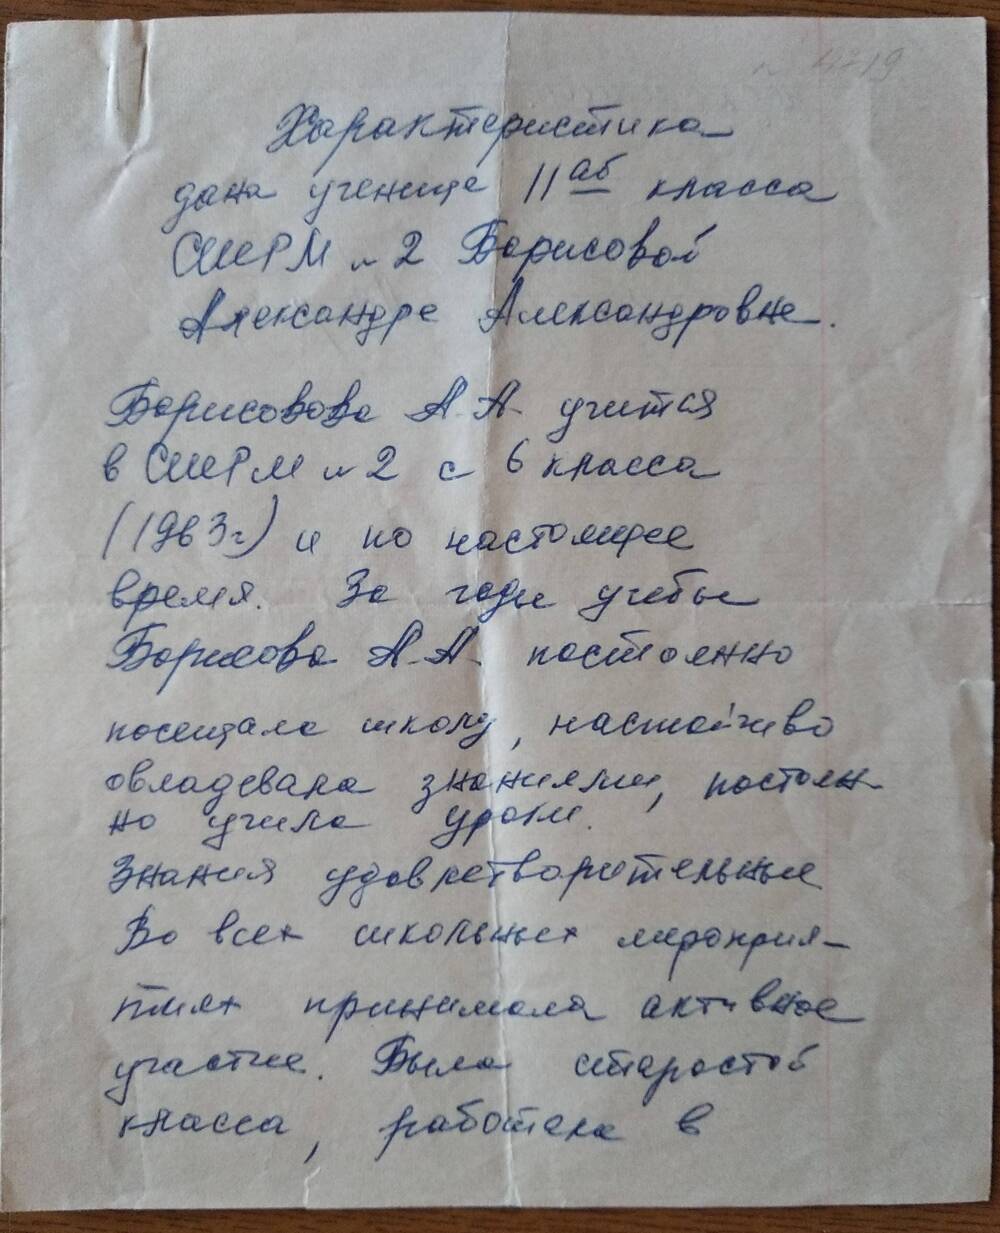 Характеристика на Борисову Александру Александровну, ученицу 11-ого класса (рукописная на тетрадном листе). 1970 г.